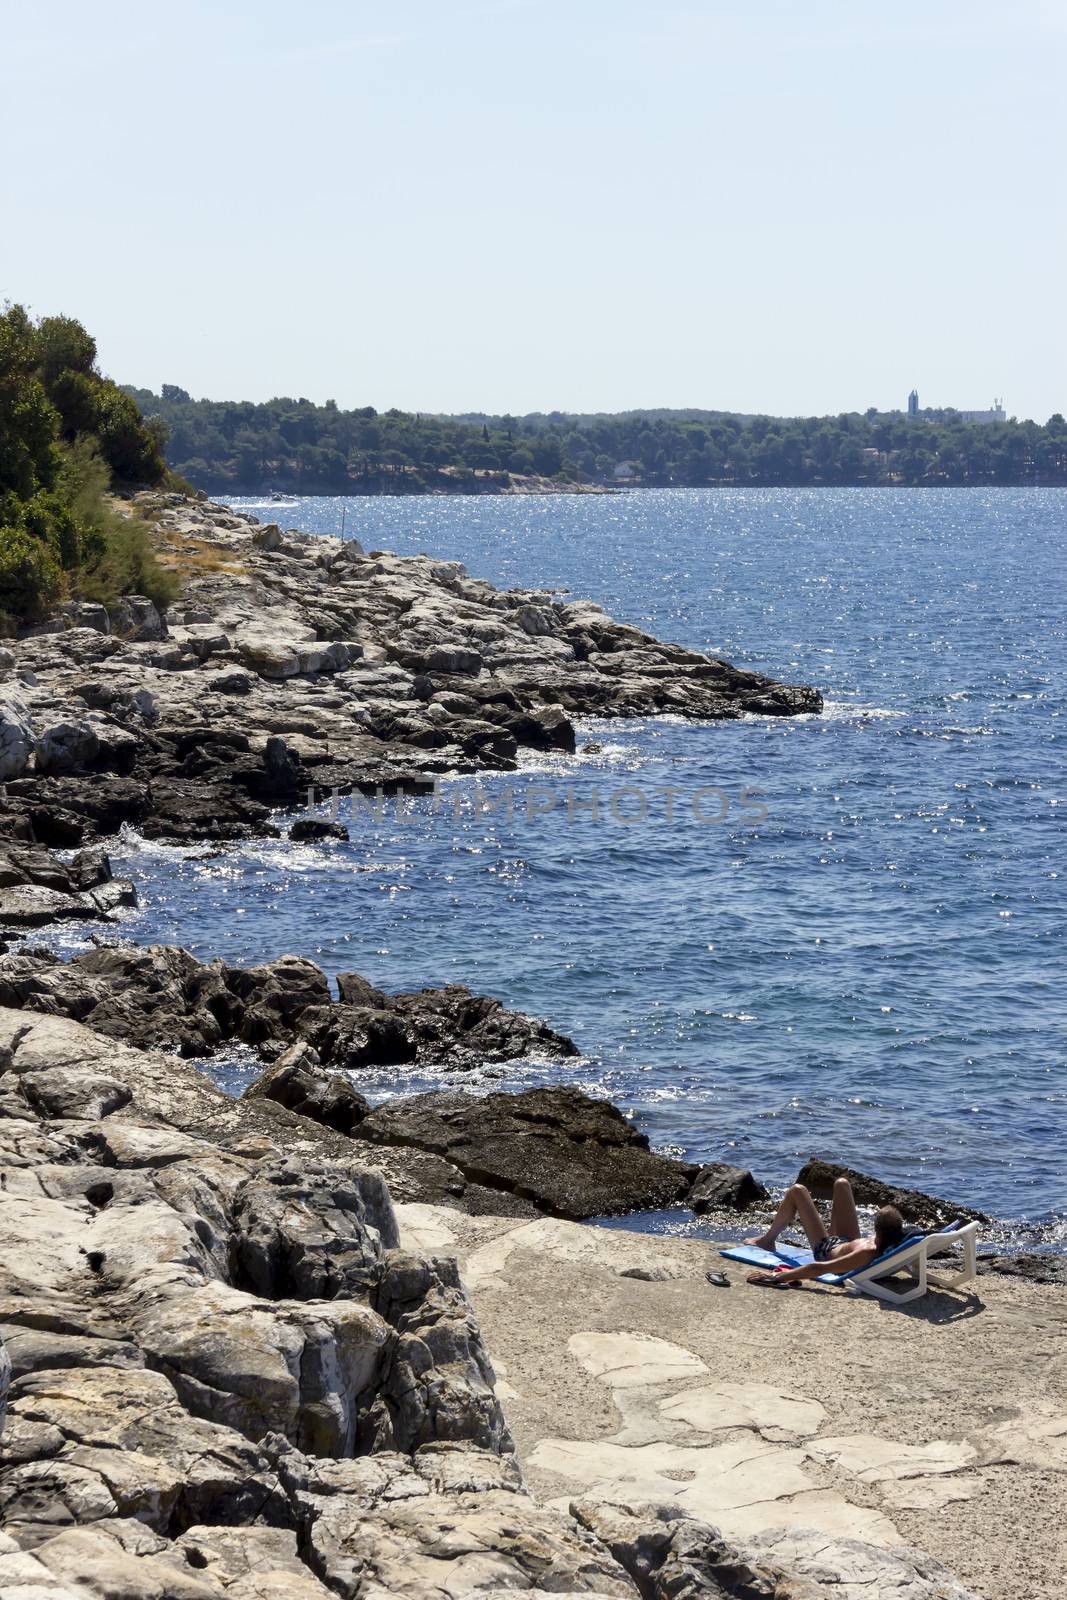 Istria peninsula beach - Adriatic Sea. Croatia - beautiful Mediterranean coast landscape in Porec